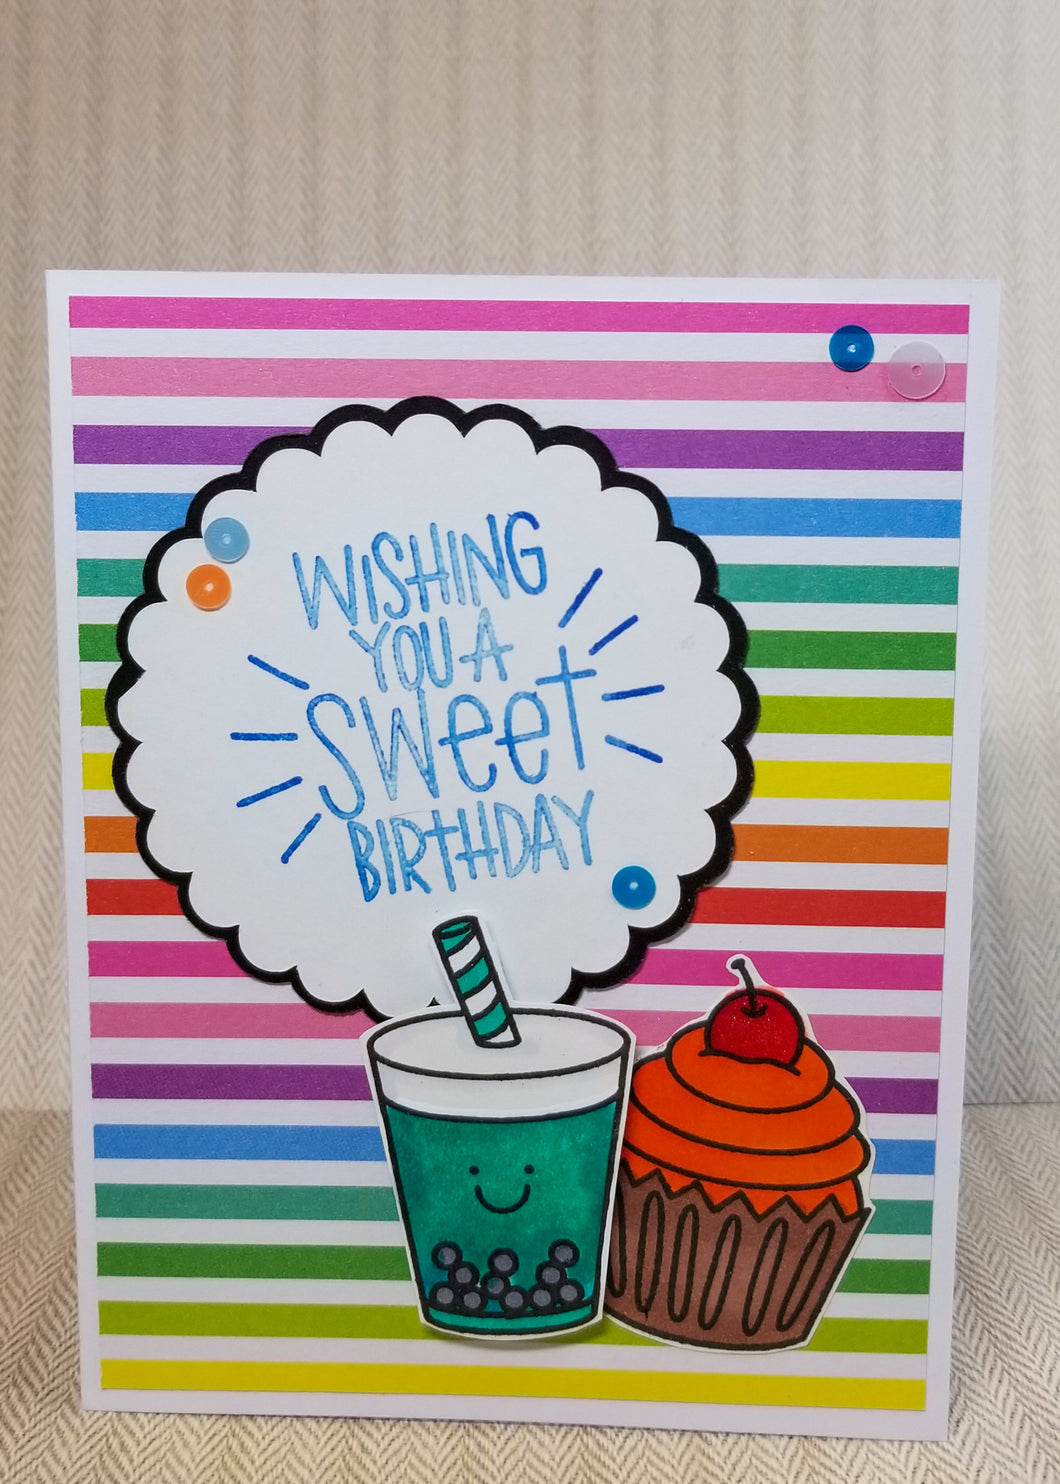 Sweet Birthday Card